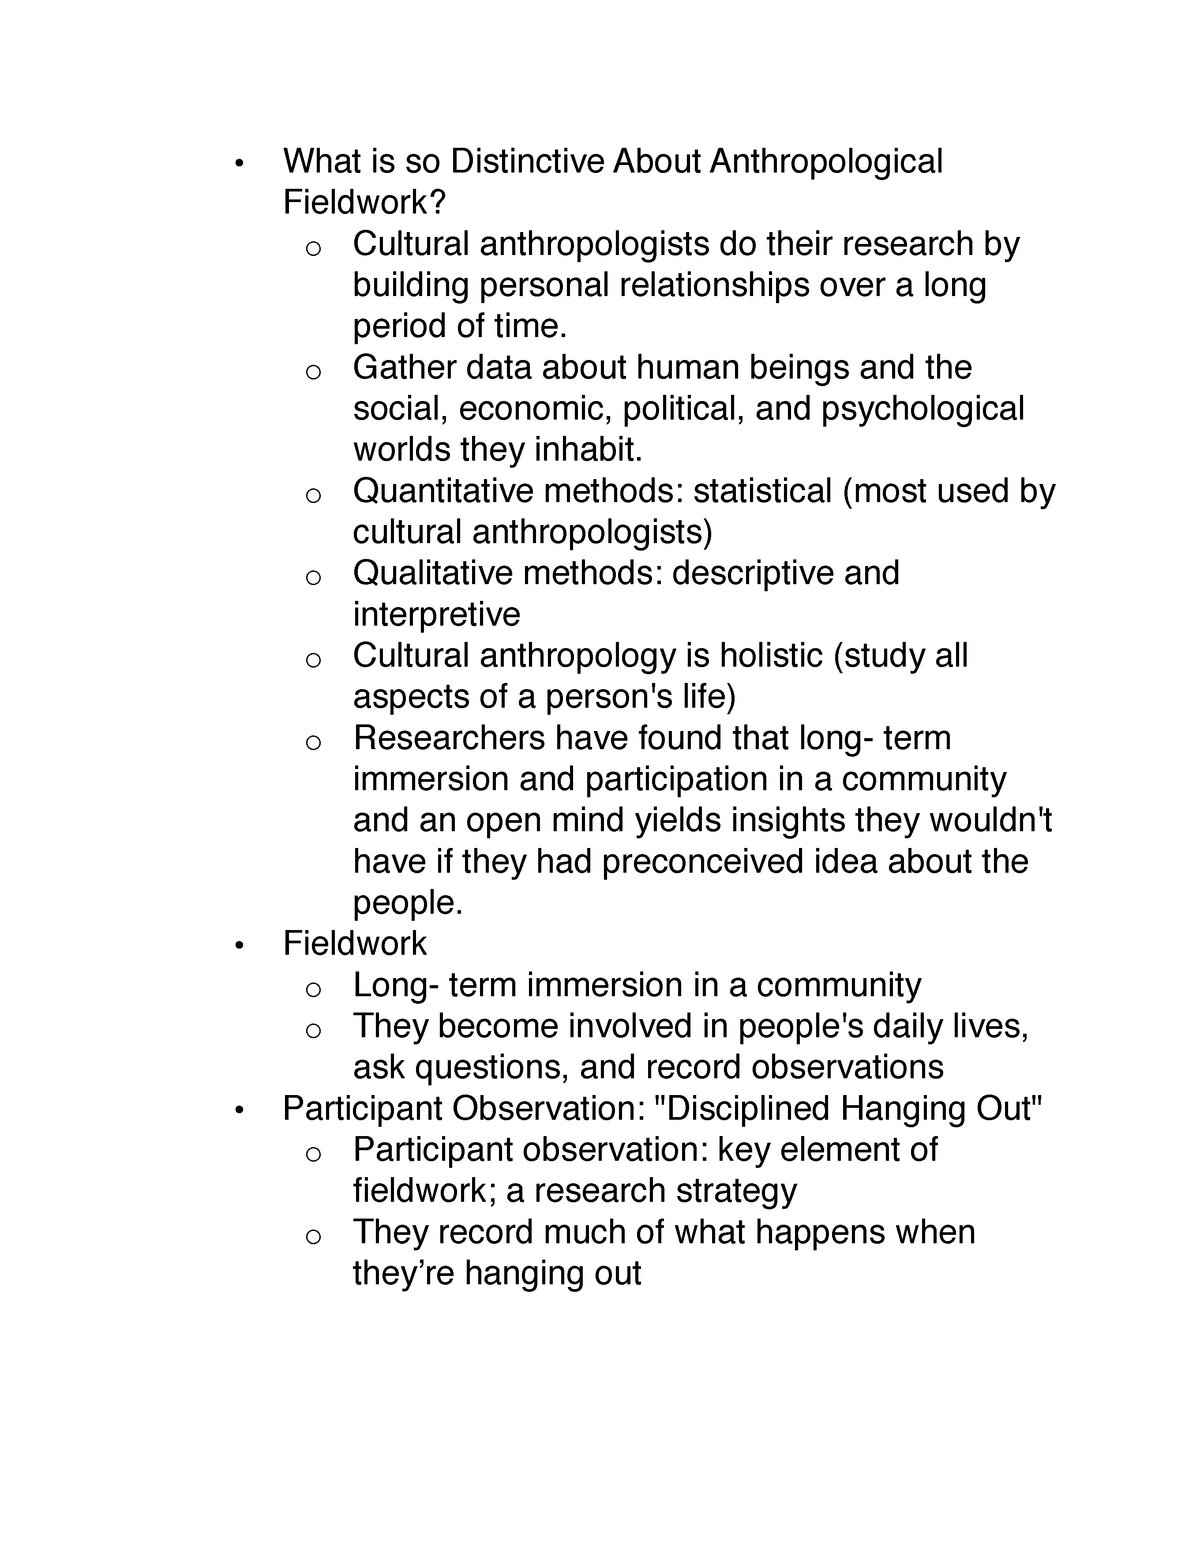 argumentative essay on cultural anthropology